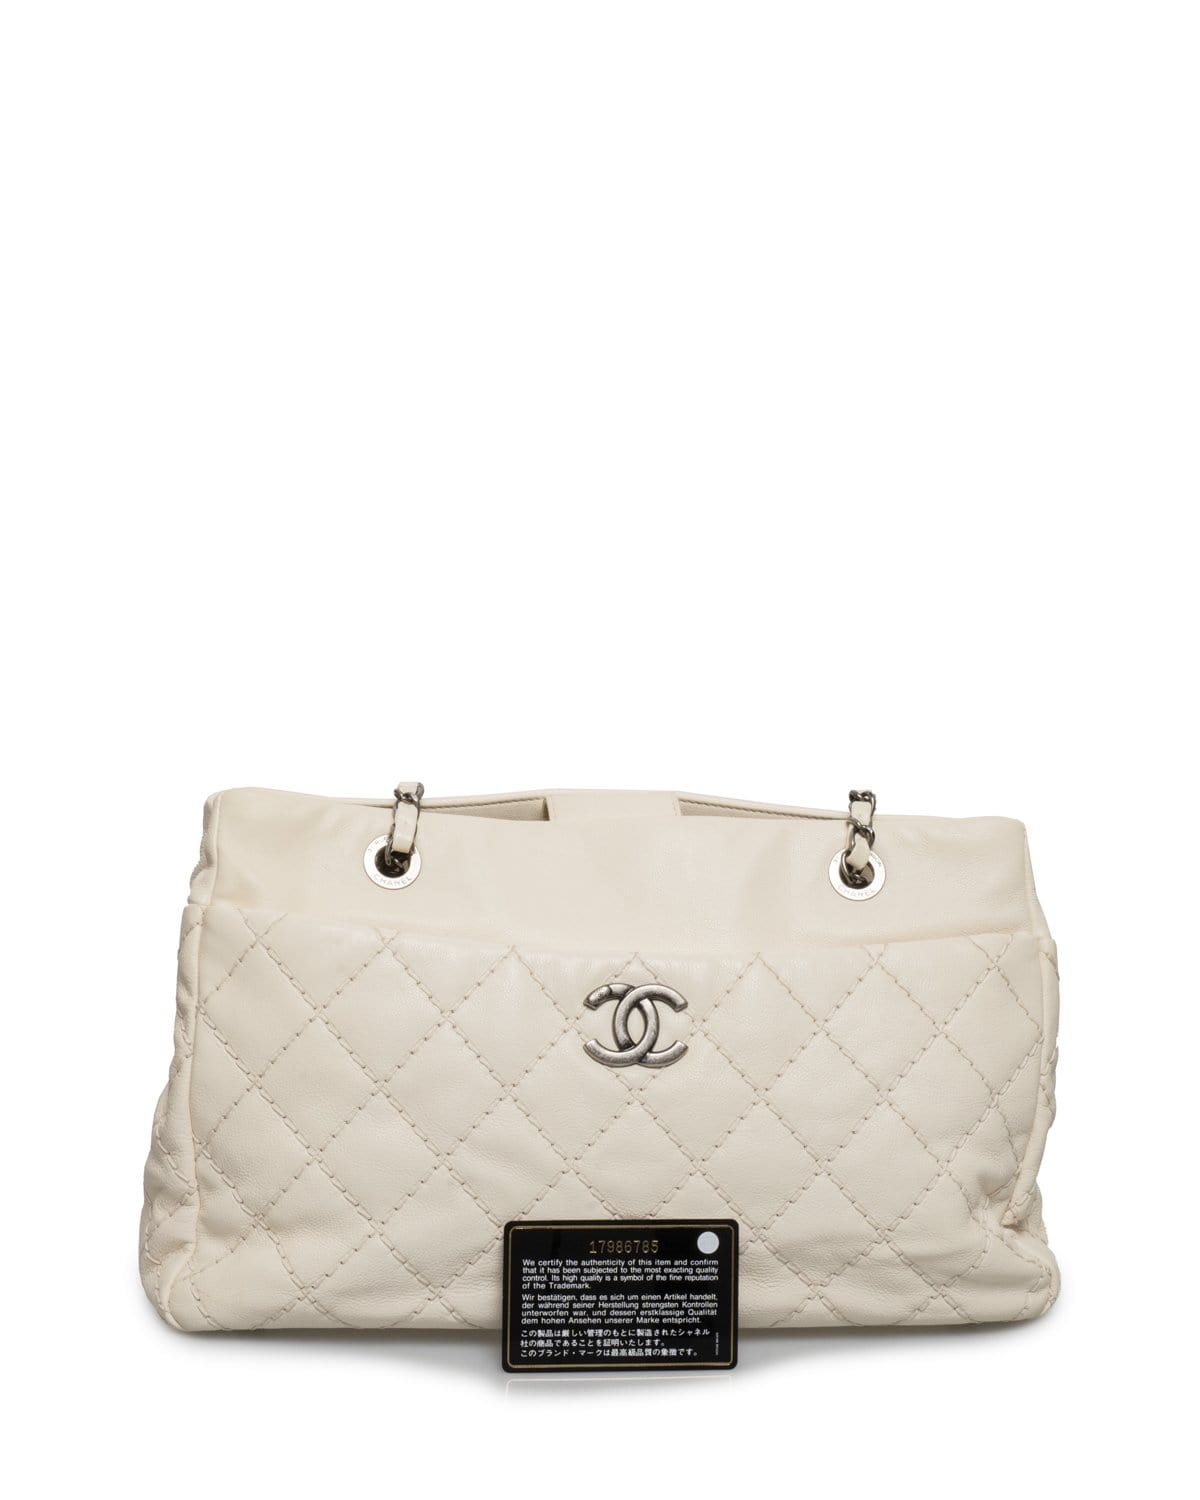 Chanel Chanel Wild Stitch tote Bag - ADL1517